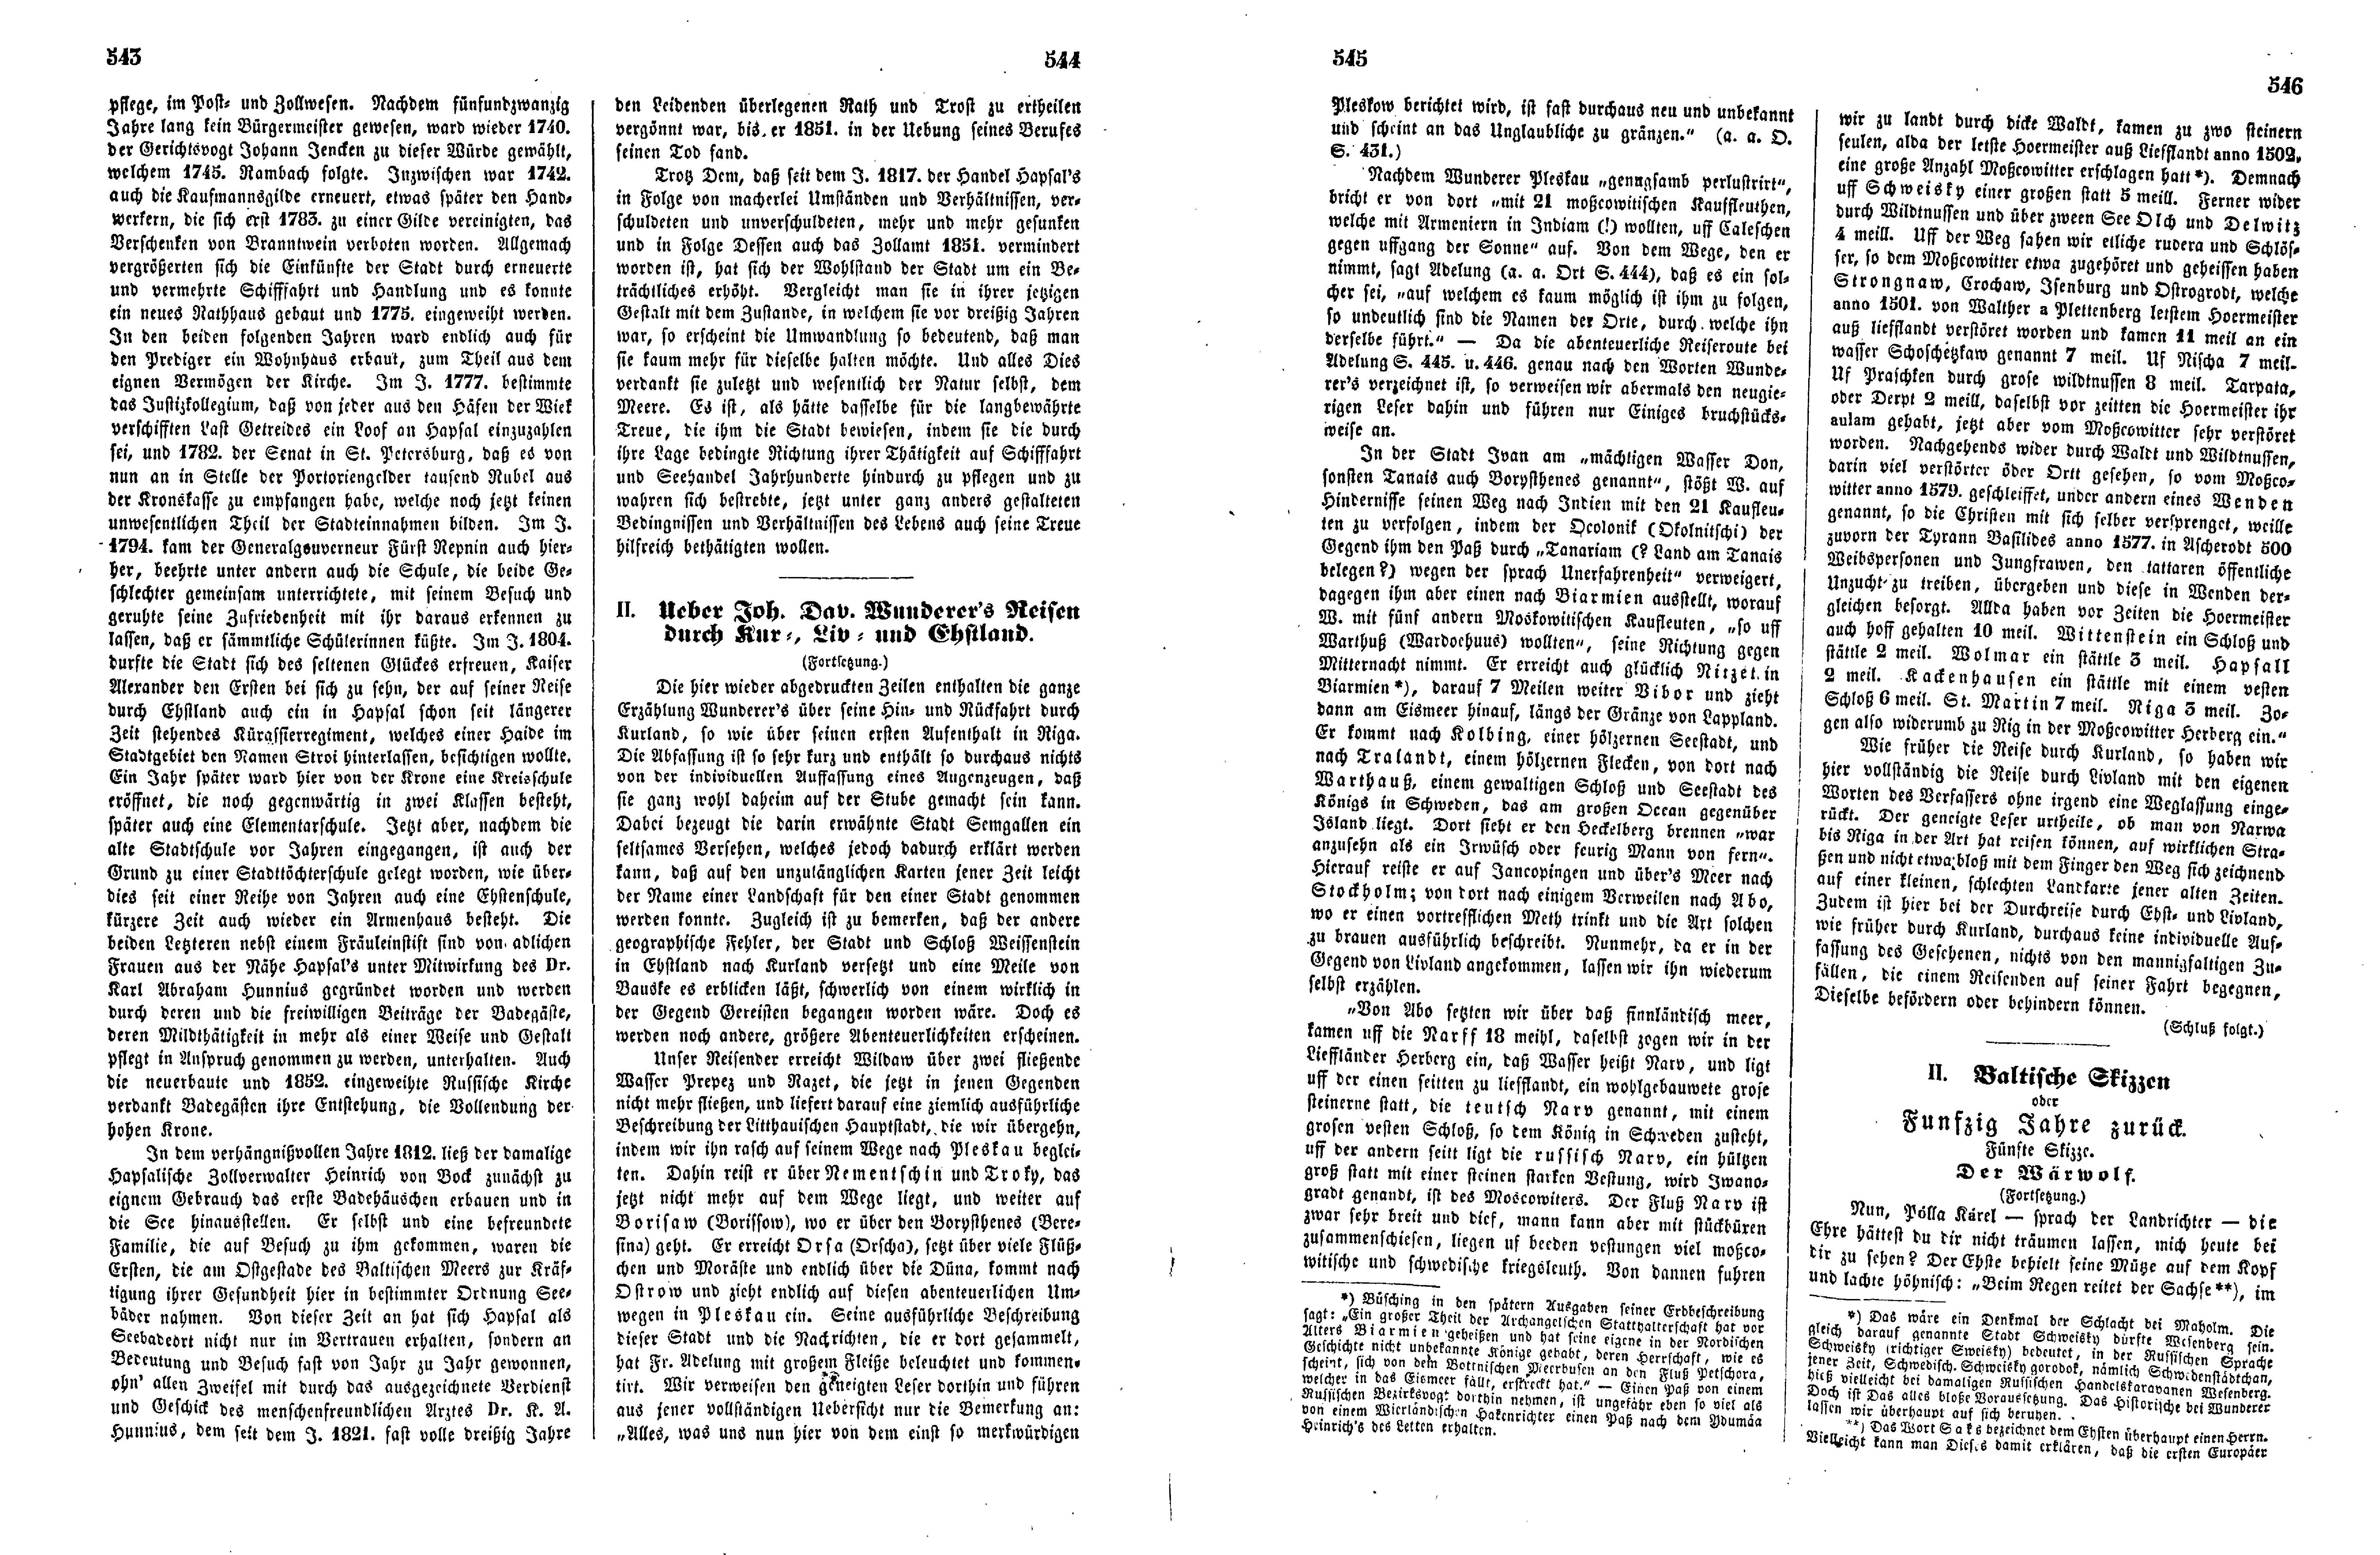 Das Inland [17] (1852) | 141. (543-546) Main body of text